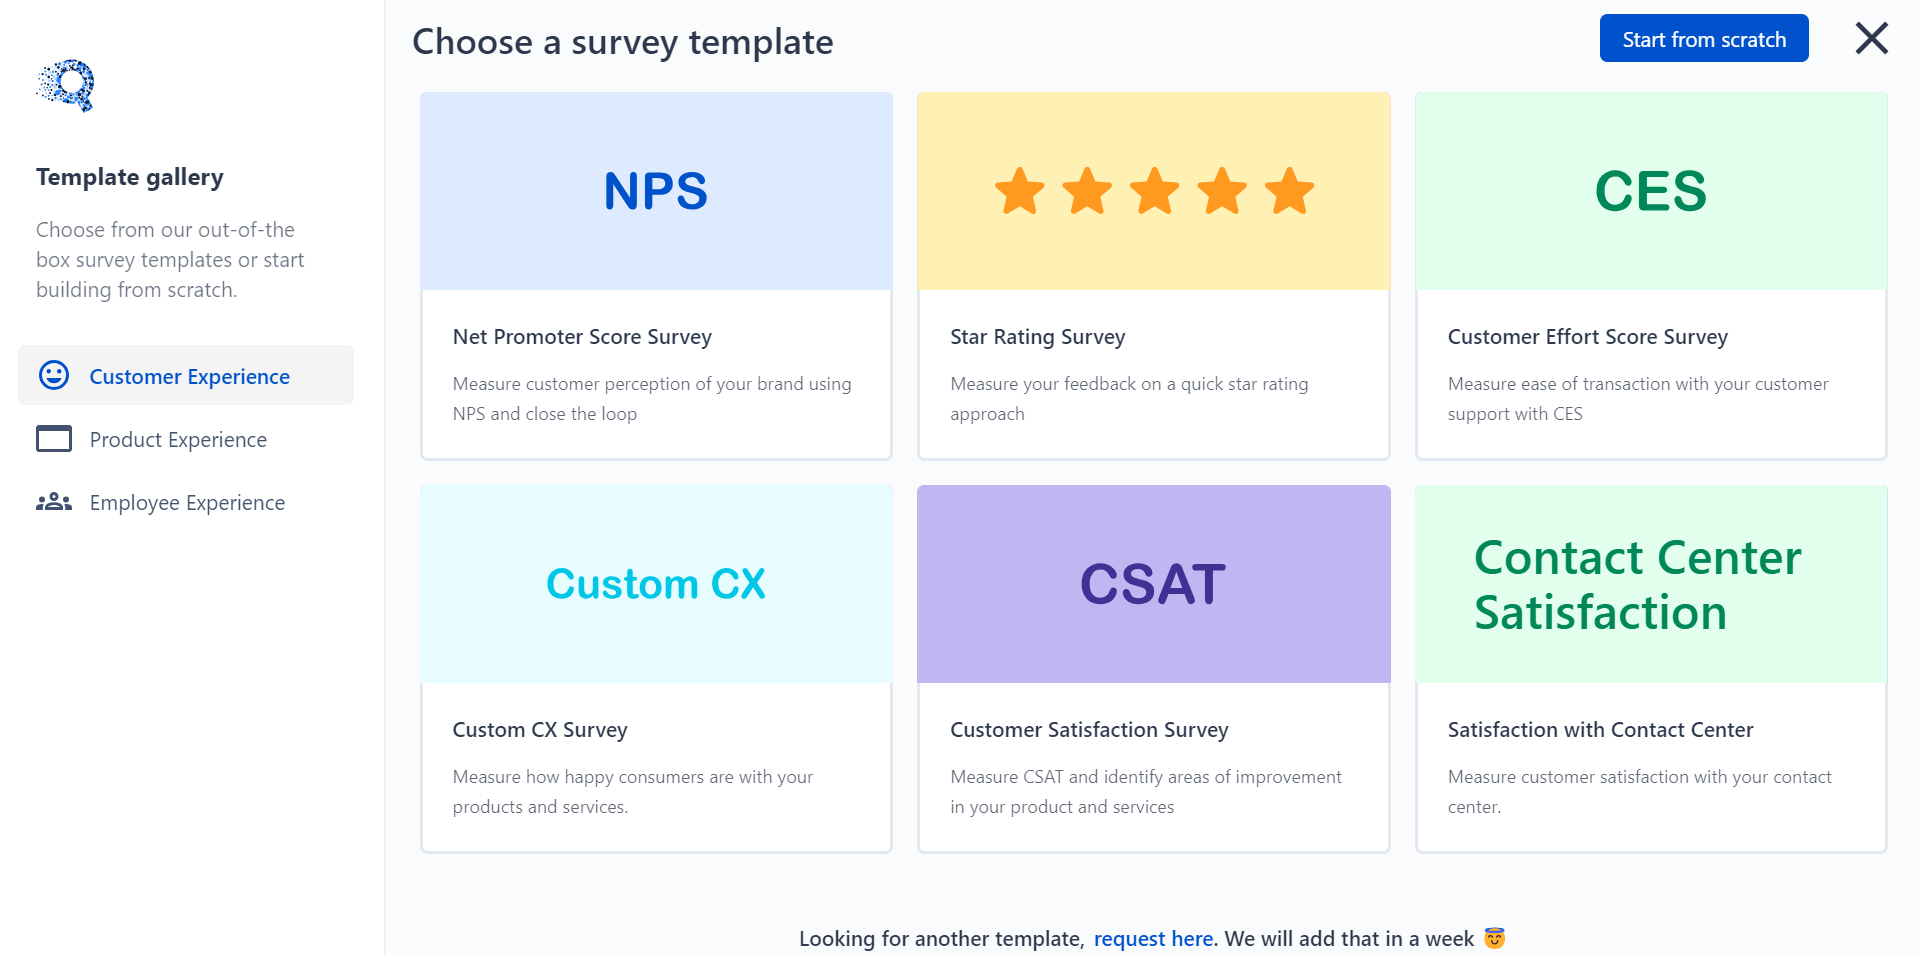 The image shows SurveySenusm in-built survey templates 